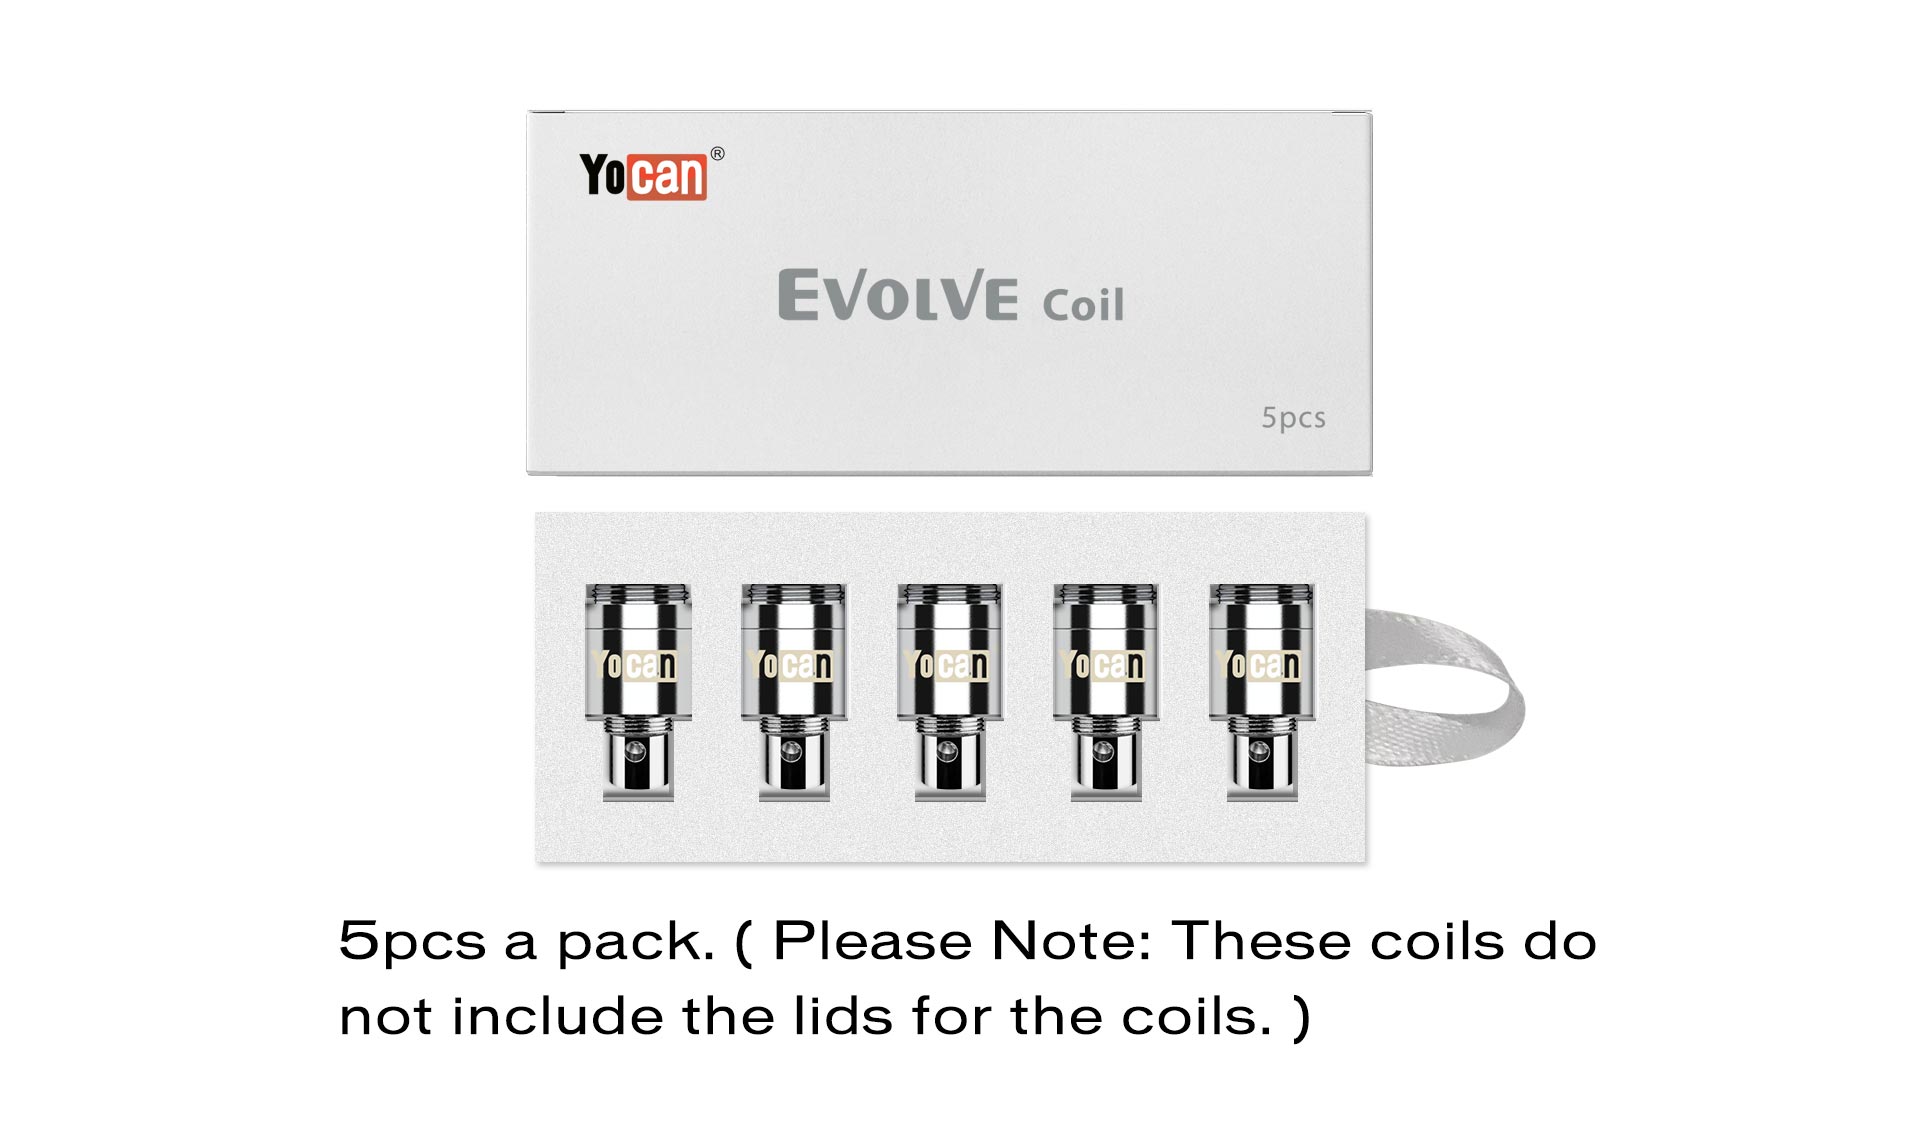 Yocan Evolve coil - 5 pcs - 2020 version package box